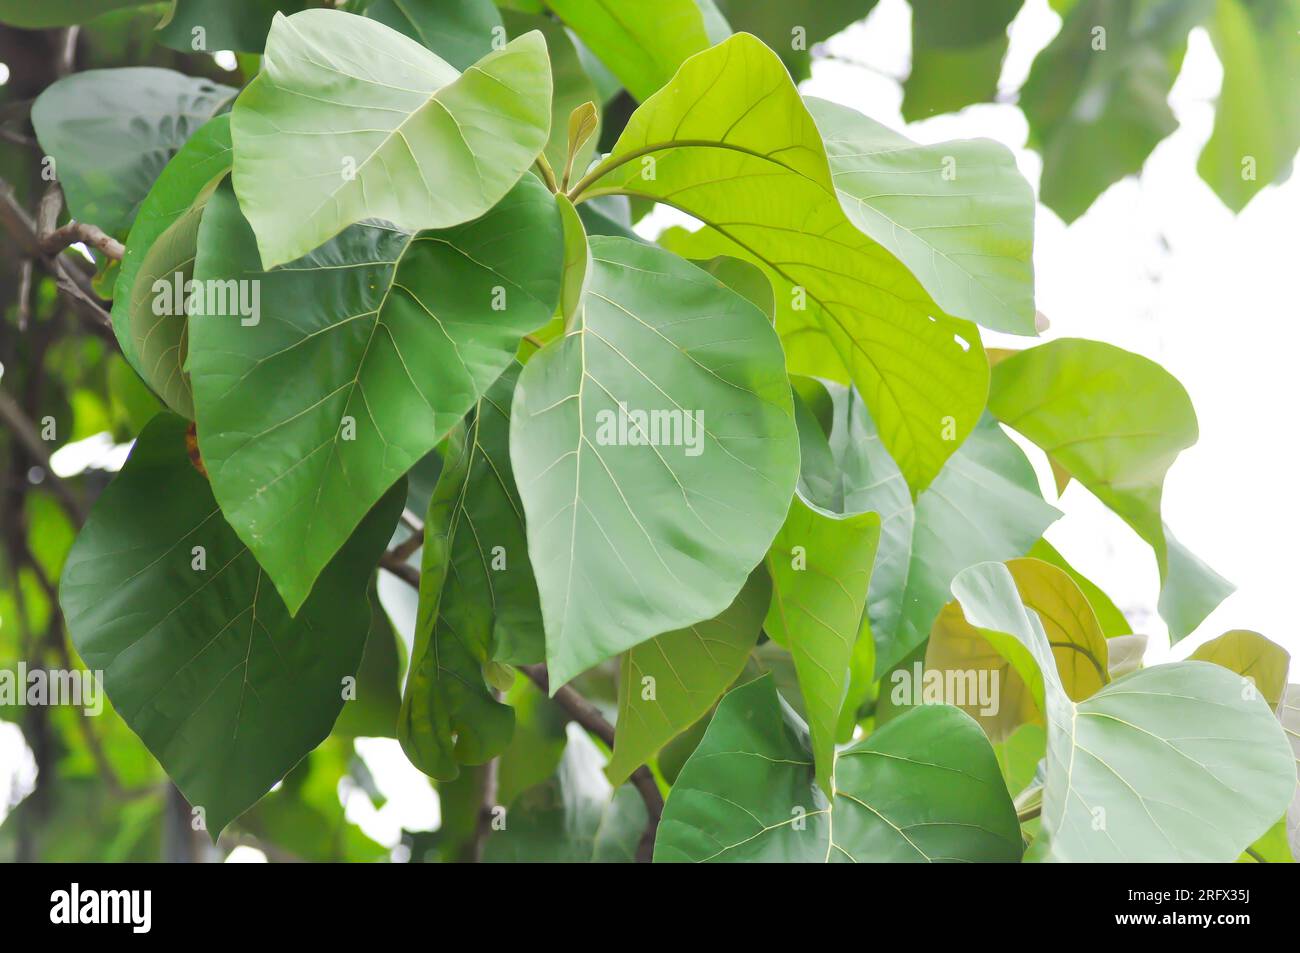 Tectona grandis, Teak or LAMIACEAE or teak plant or teak leaf and sky background Stock Photo